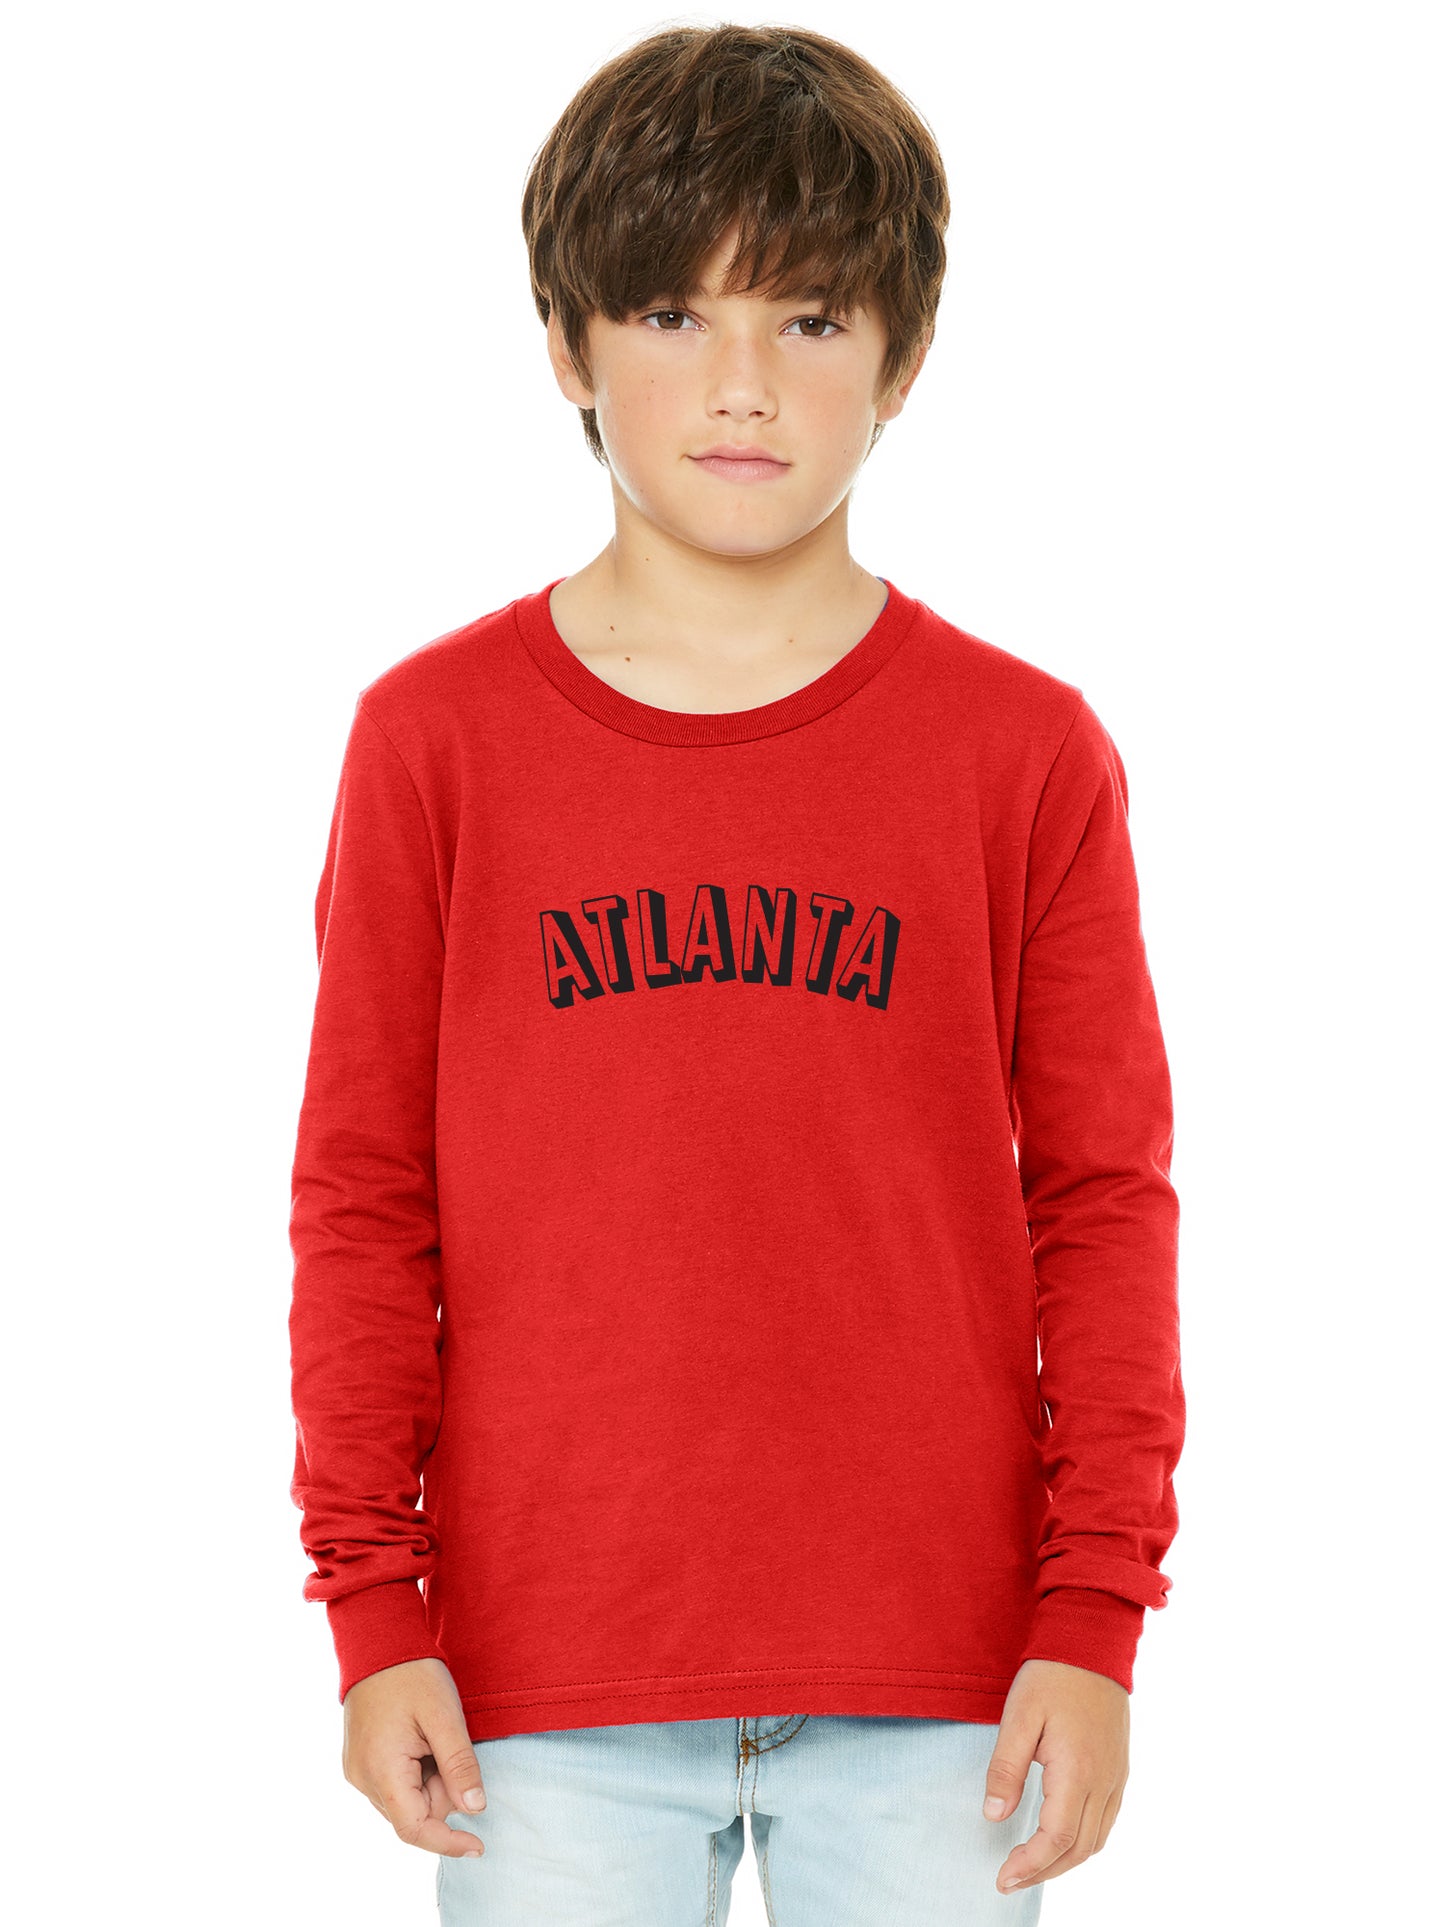 Daxton Youth Long Sleeve Atlanta Basic Tshirt